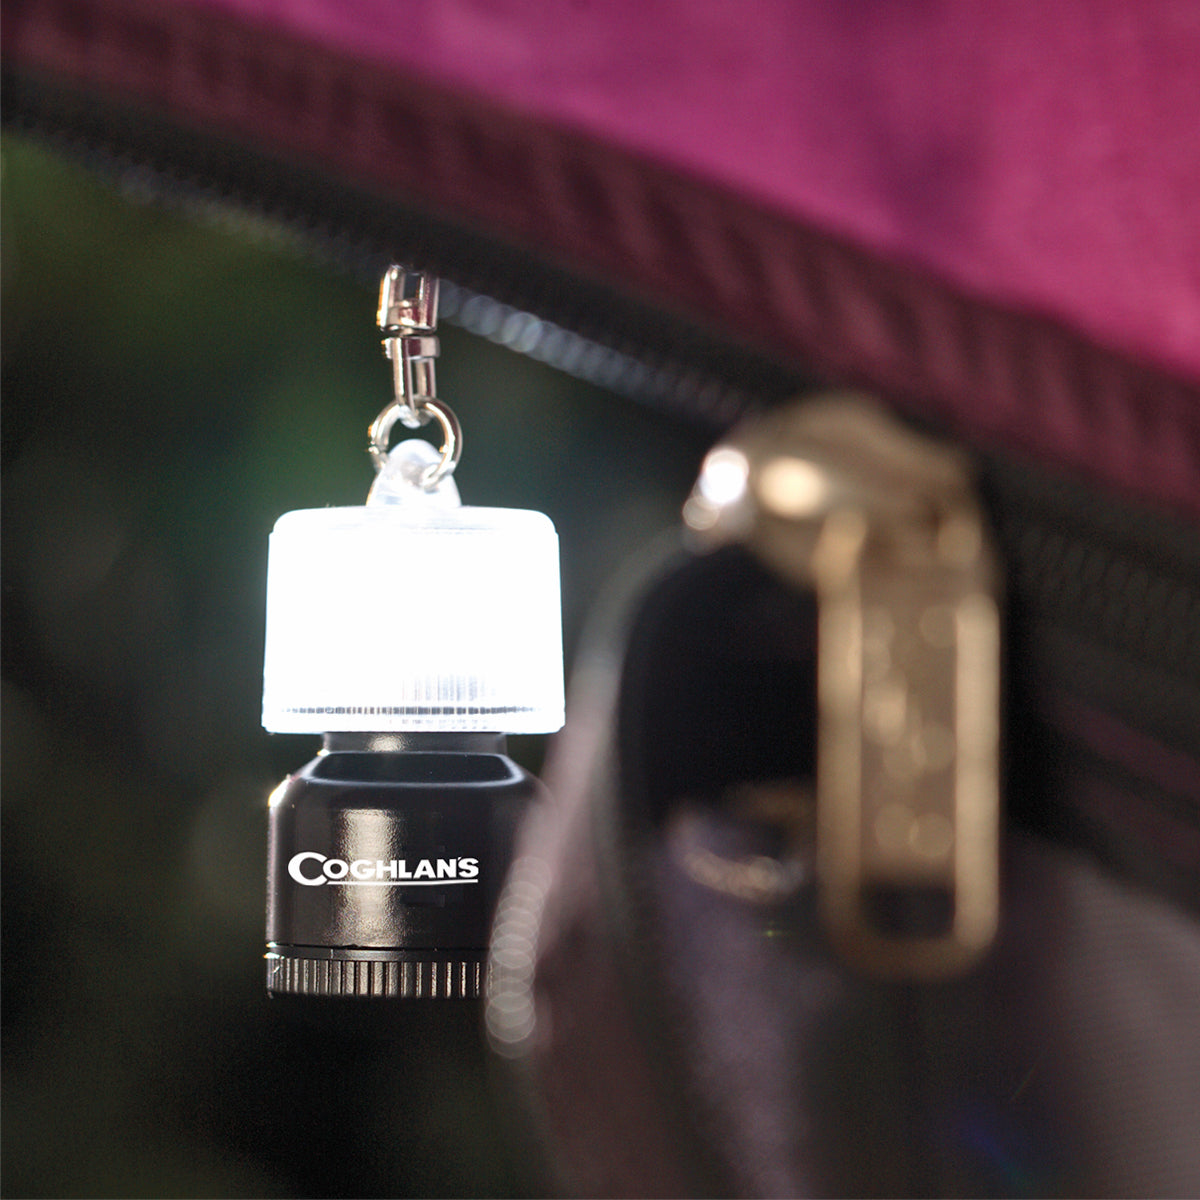 Coghlan's Micro Lantern Water Resistant Mini Tent LED Light Keychain Lamp w/Clip Coghlan's